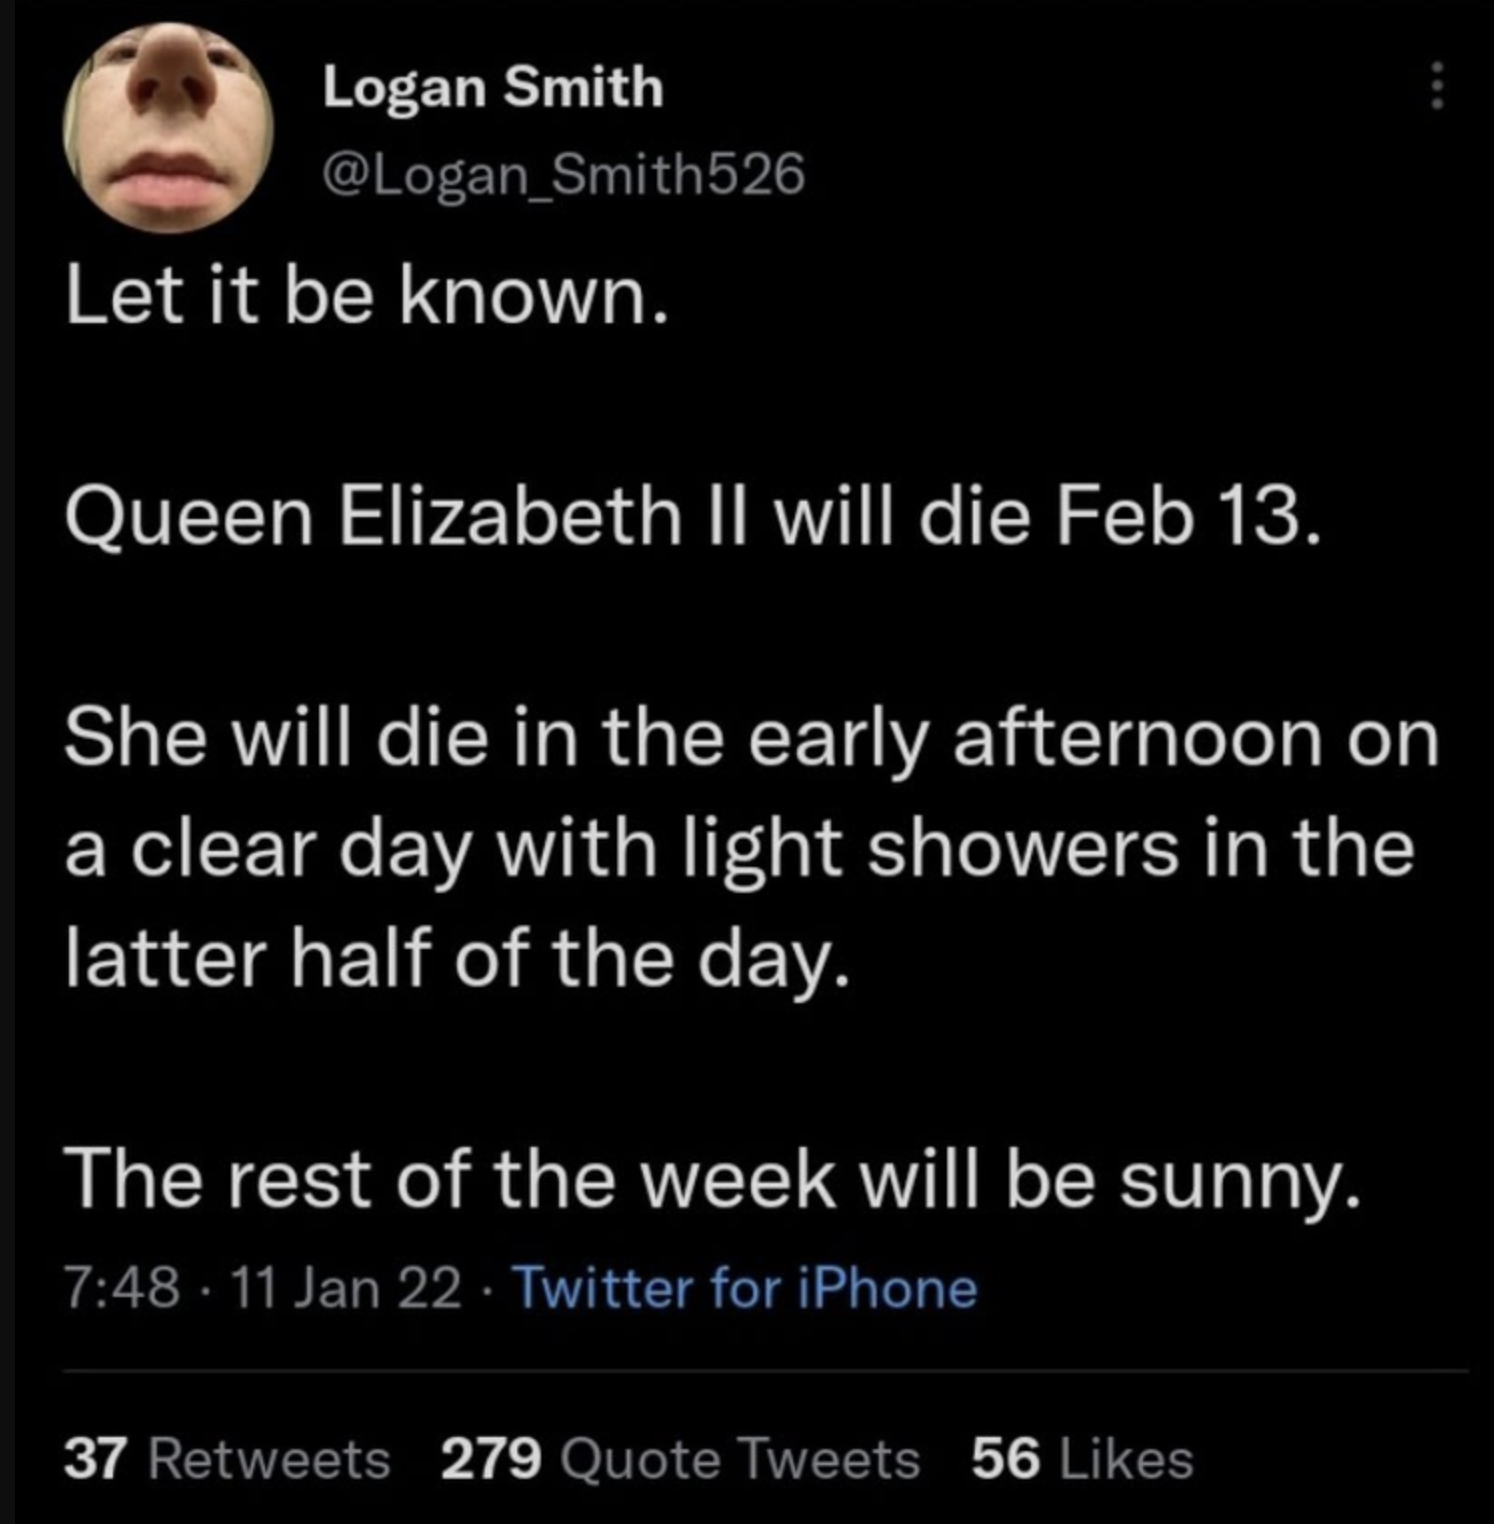 Logan Smith ya puso fecha de muerte a Isabel II.